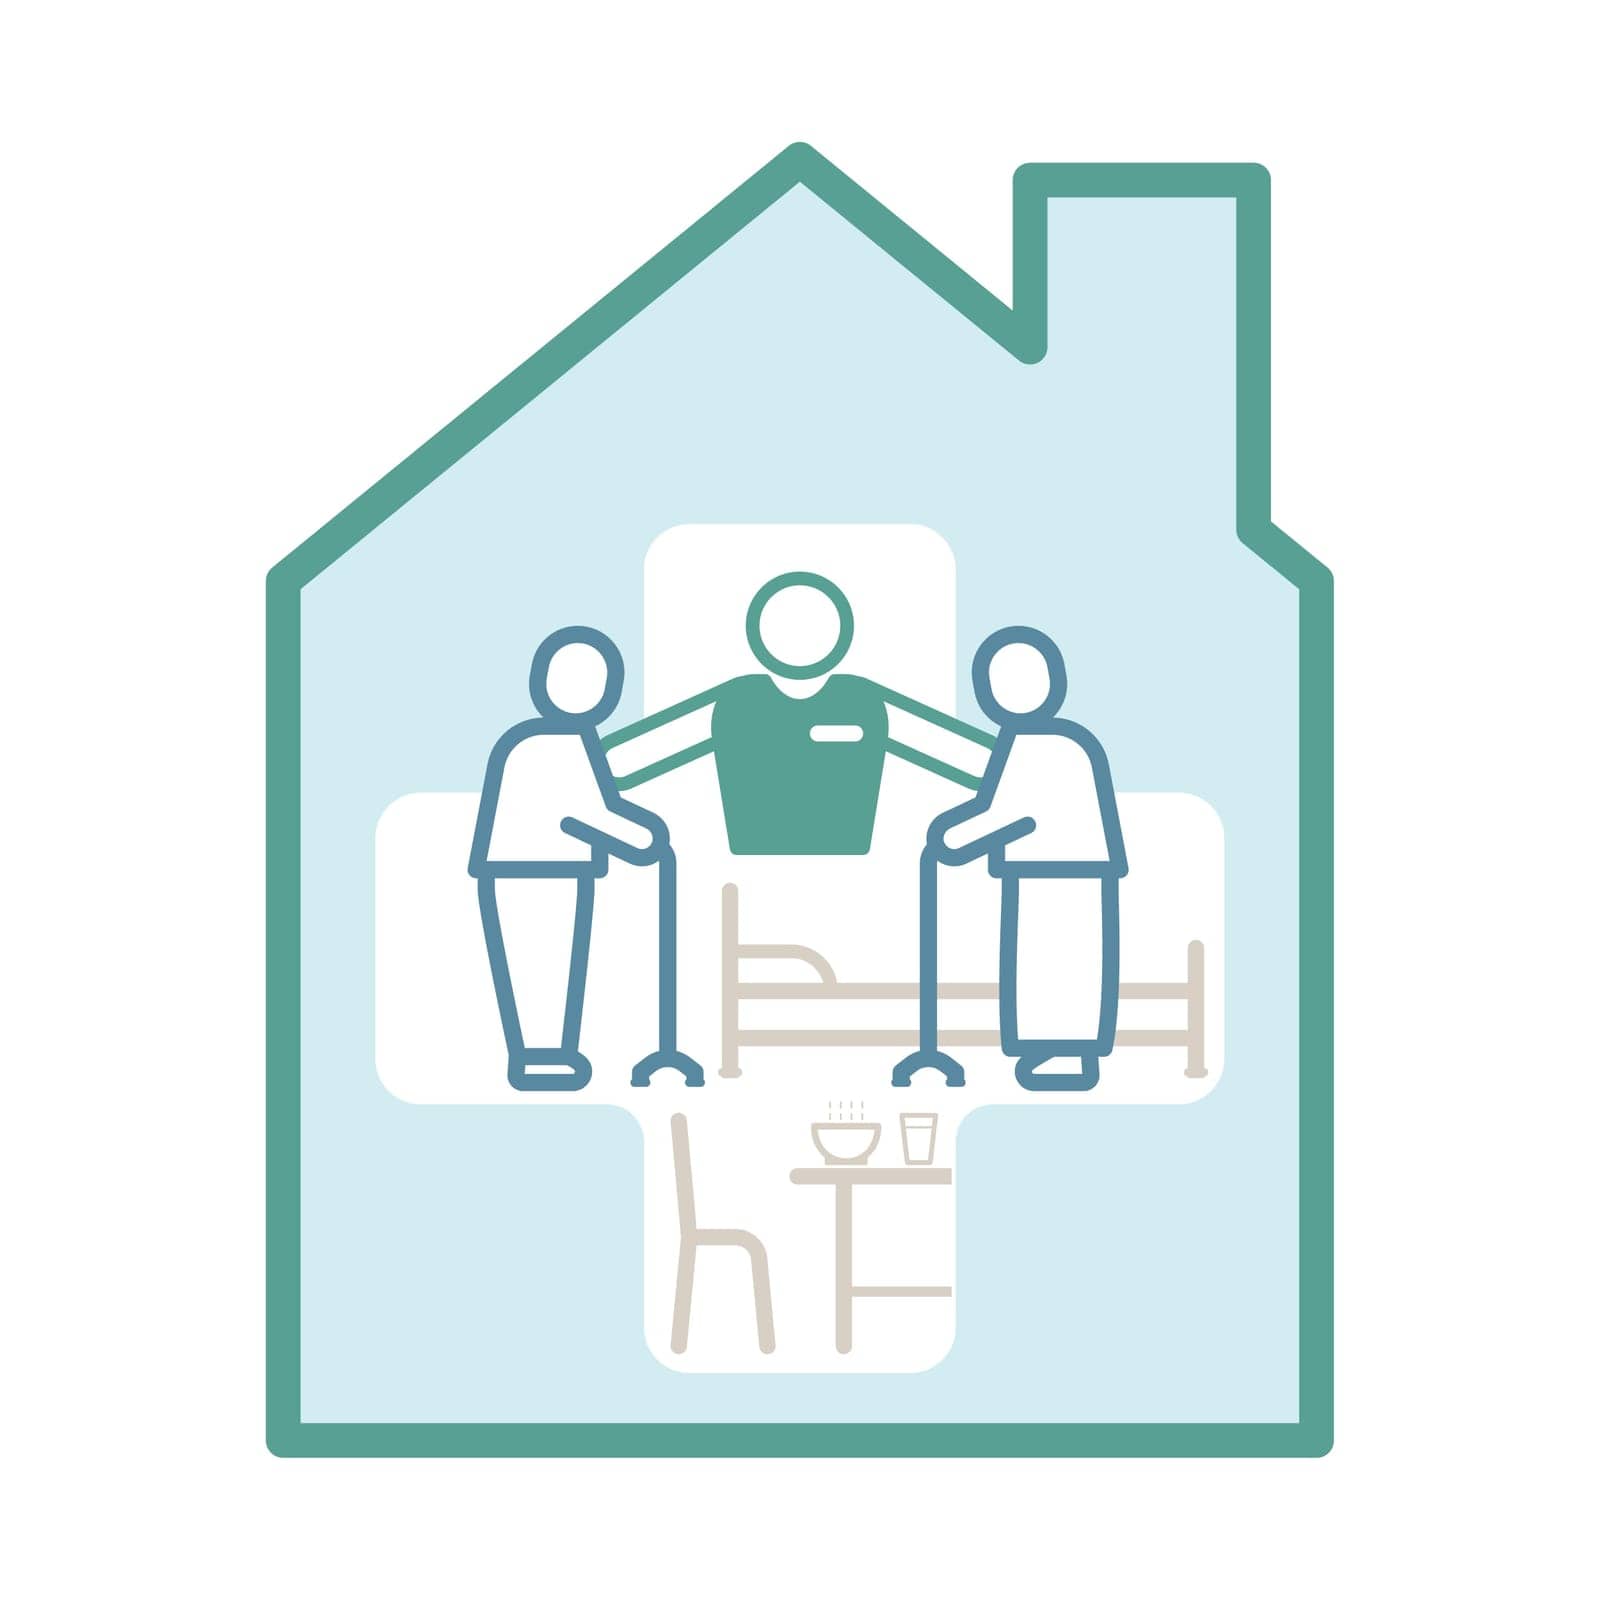 Caregiver look after elderly person inside home shape with cross symbol background. Elderly nursing home icon. Vector illustration outline flat design style.